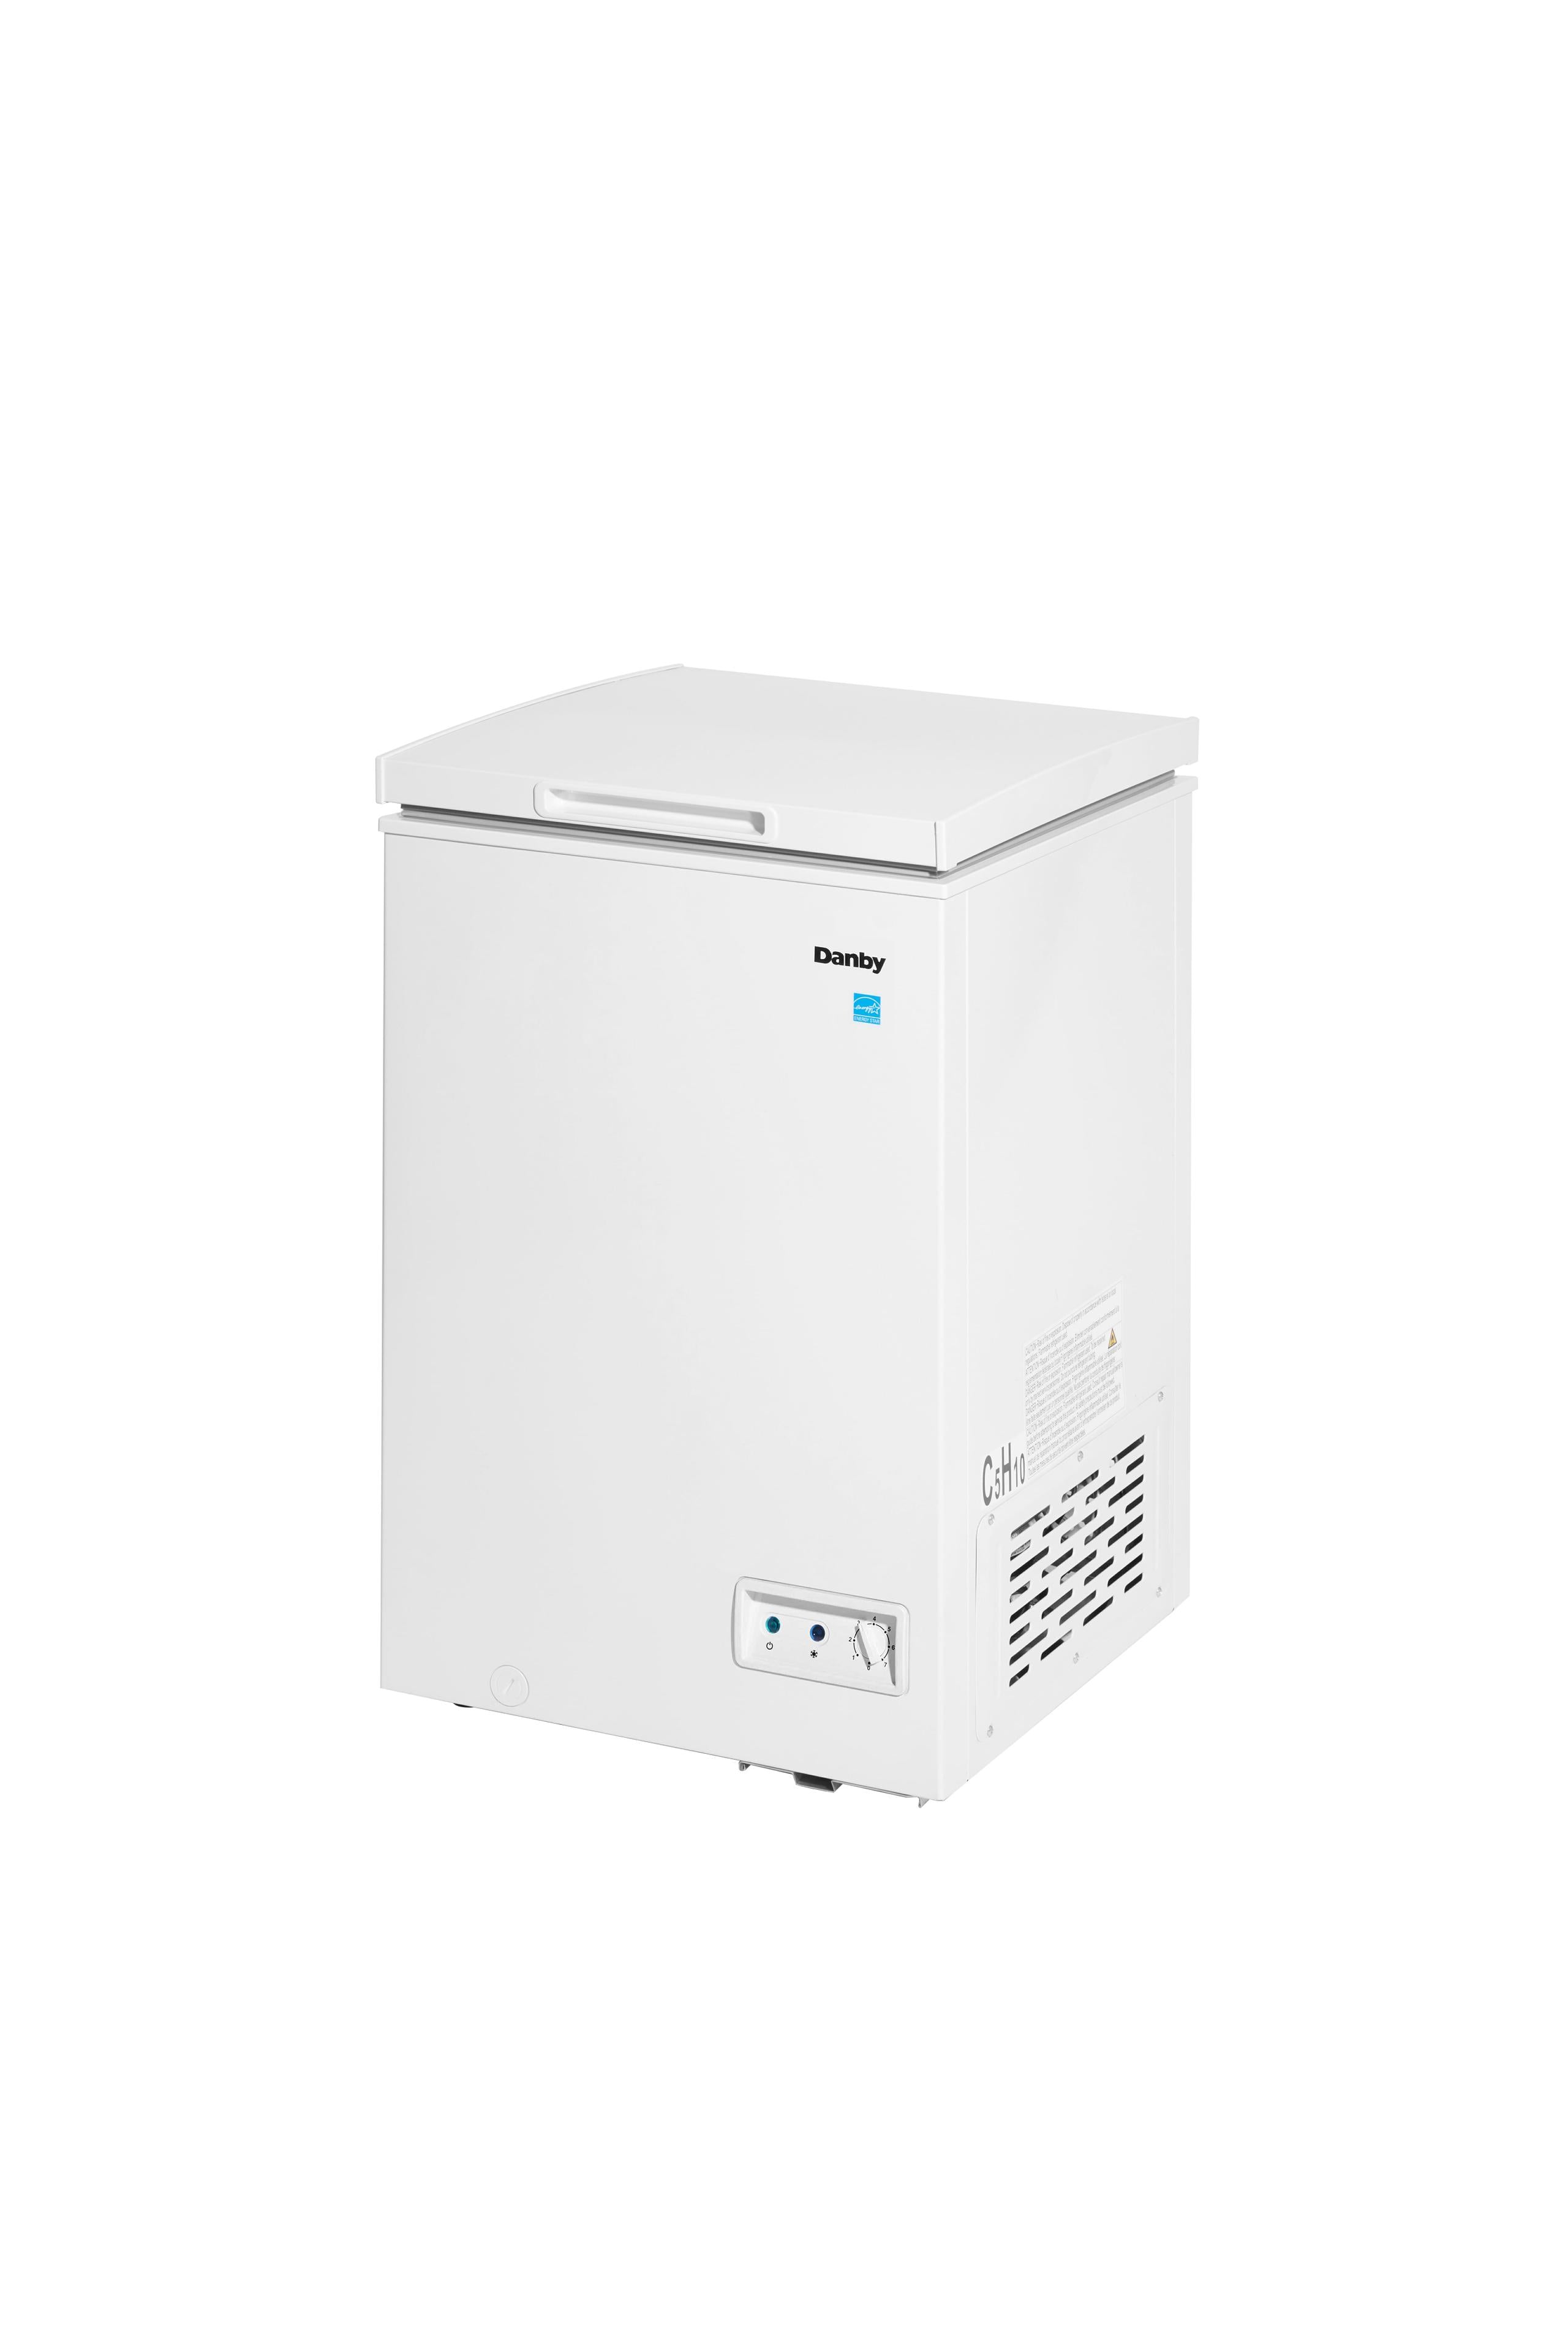 Danby DUF071A3WDB 22 7.1 Cu. Ft. Capacity Upright Freezer In White